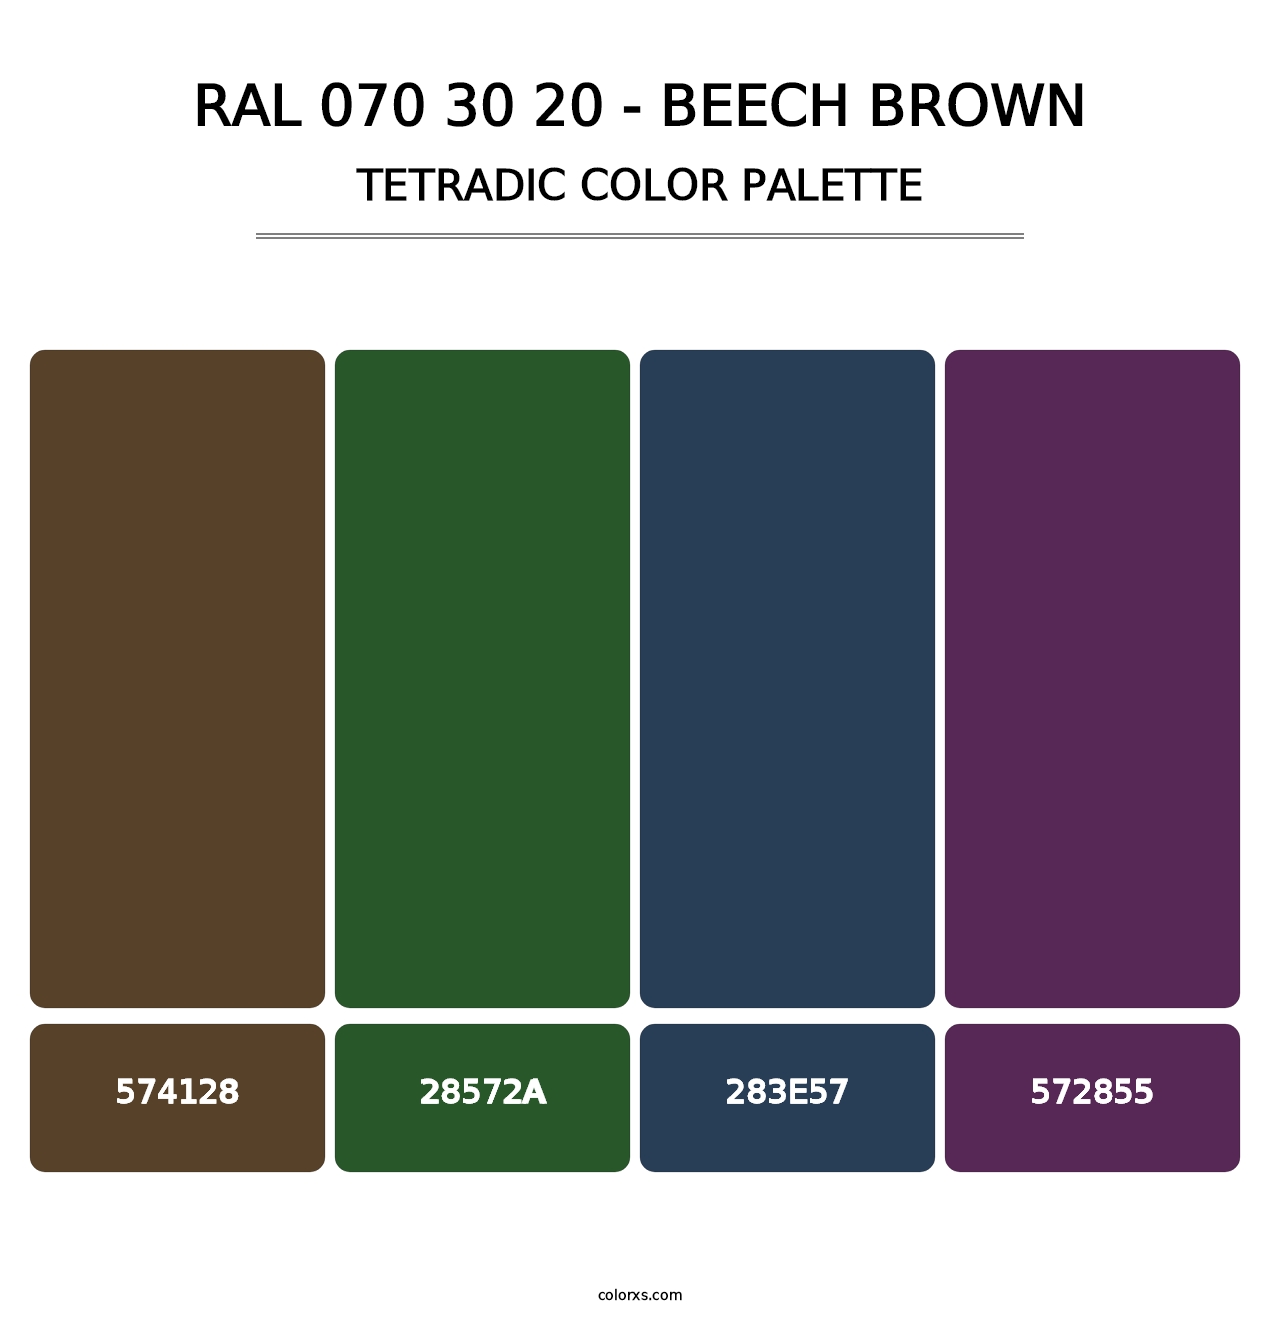 RAL 070 30 20 - Beech Brown - Tetradic Color Palette